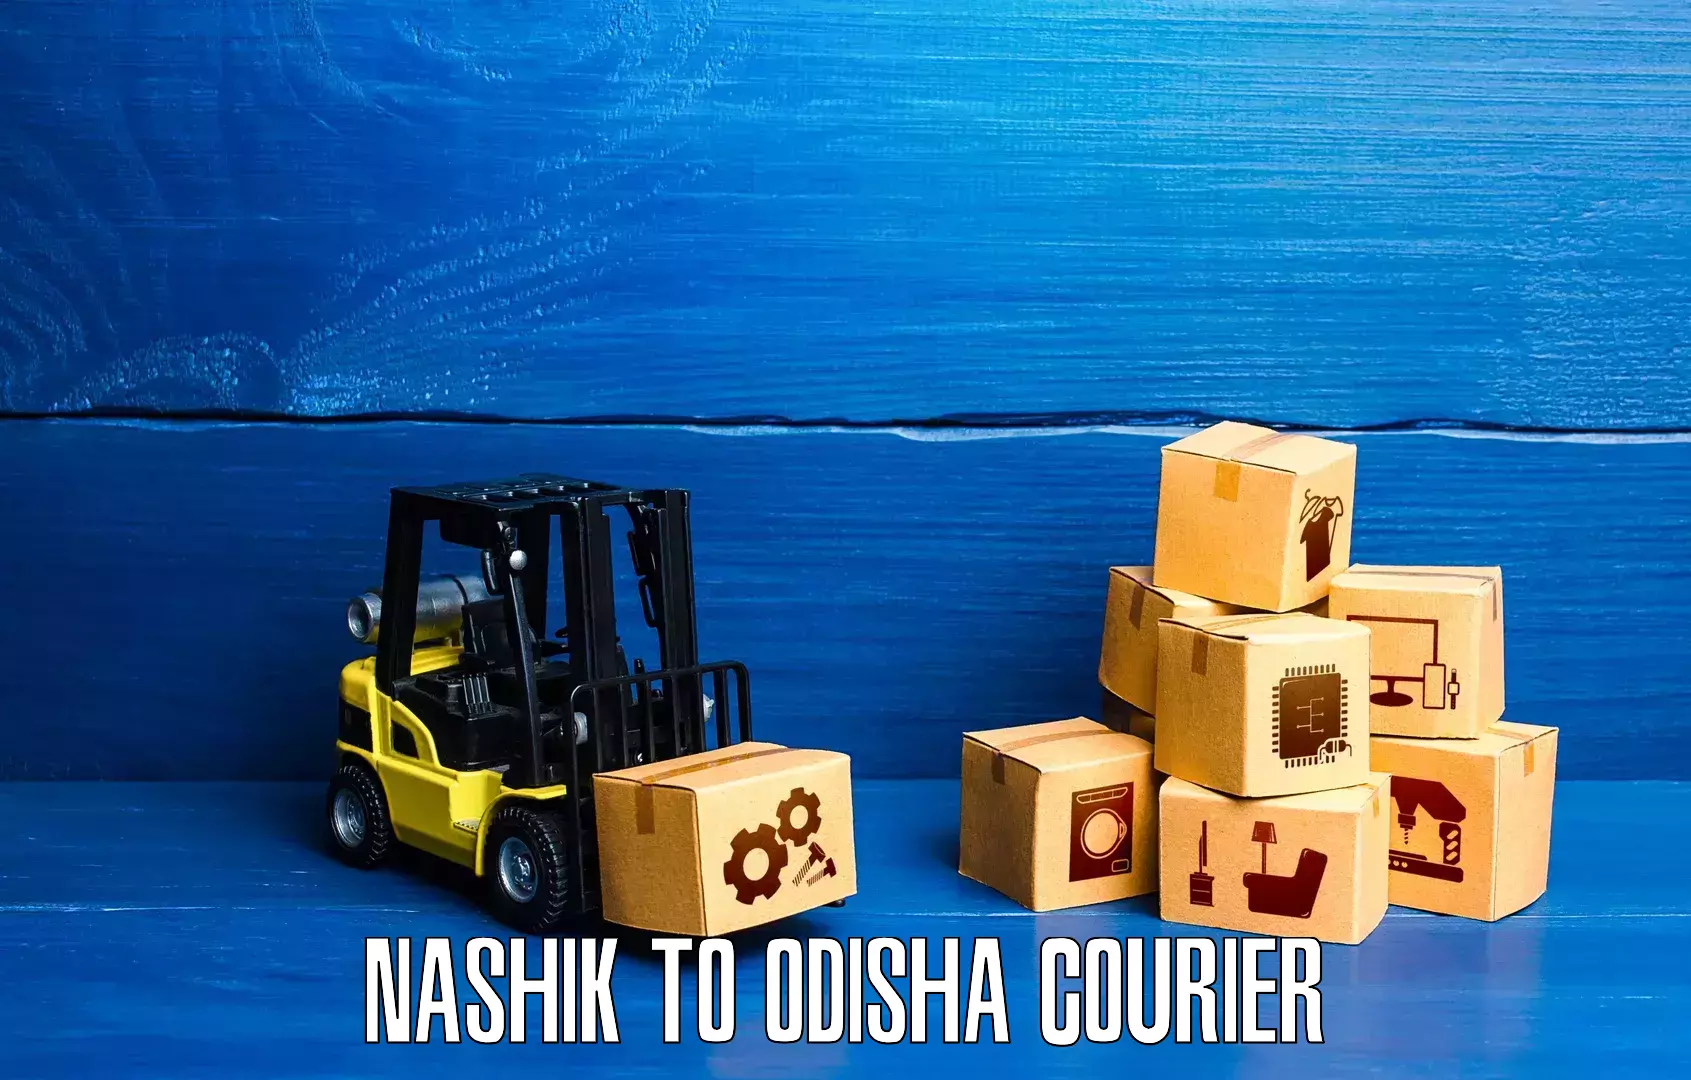 Courier service comparison Nashik to Odisha